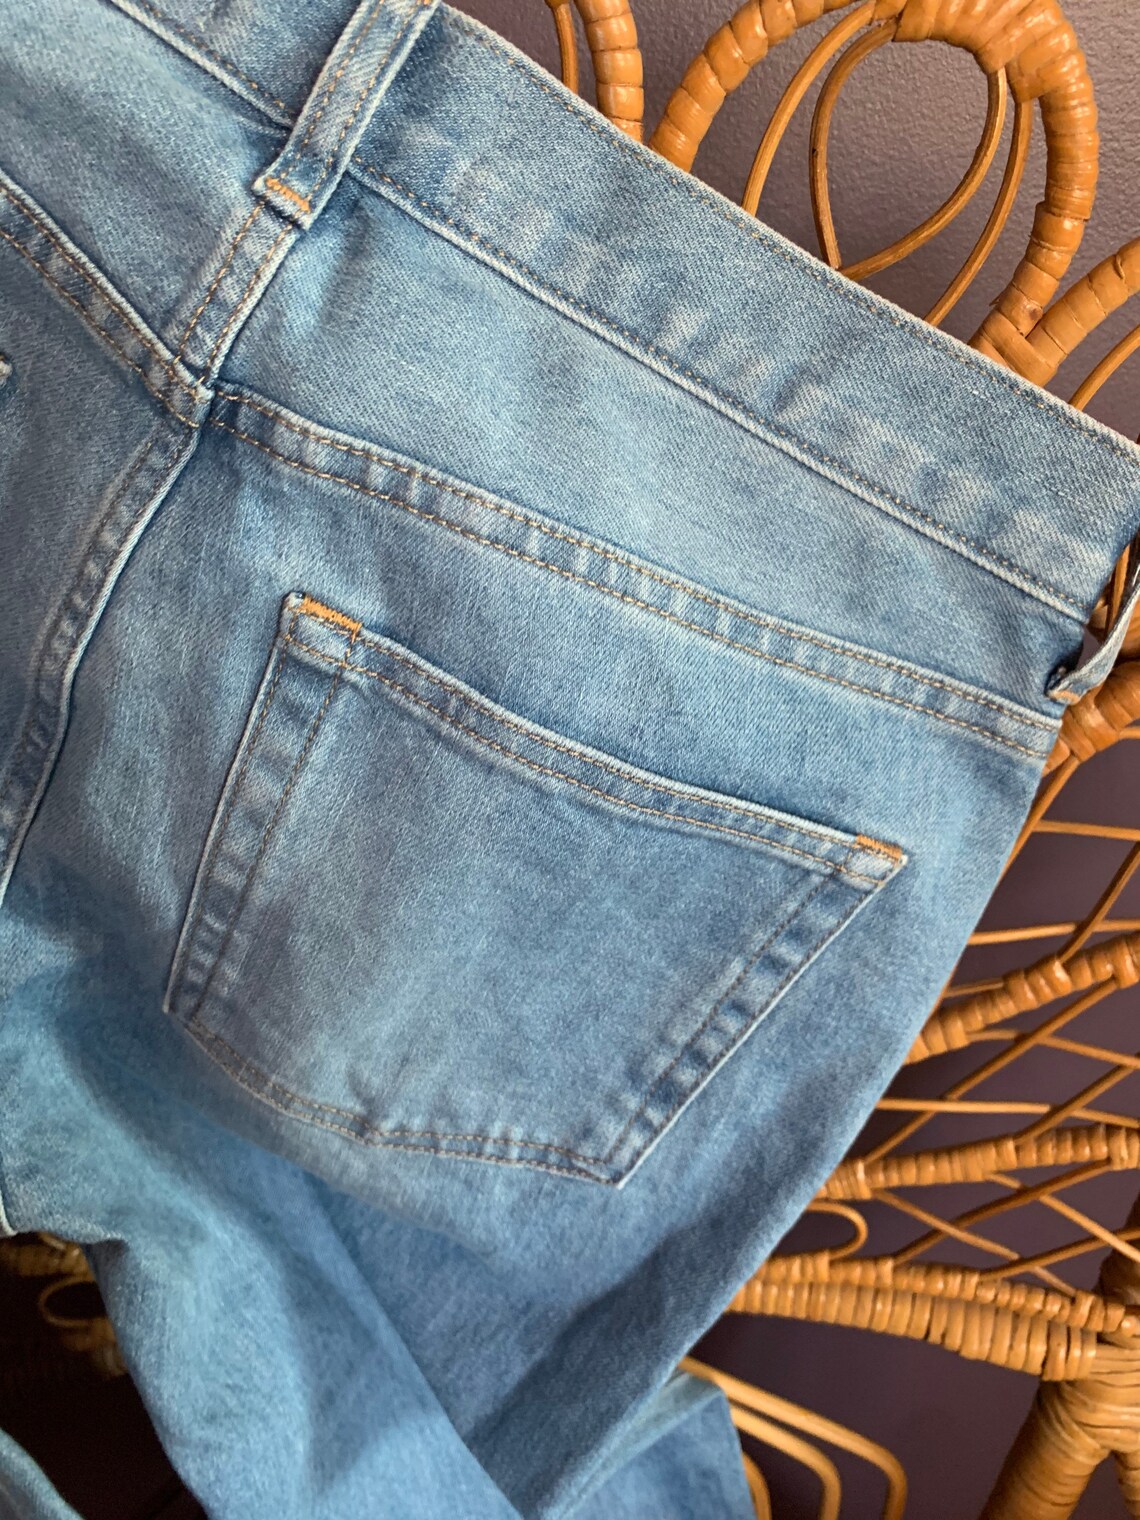 Everlane Denim Jeans Boyfriend Cut Cuffed 28 Soft Denim Light | Etsy